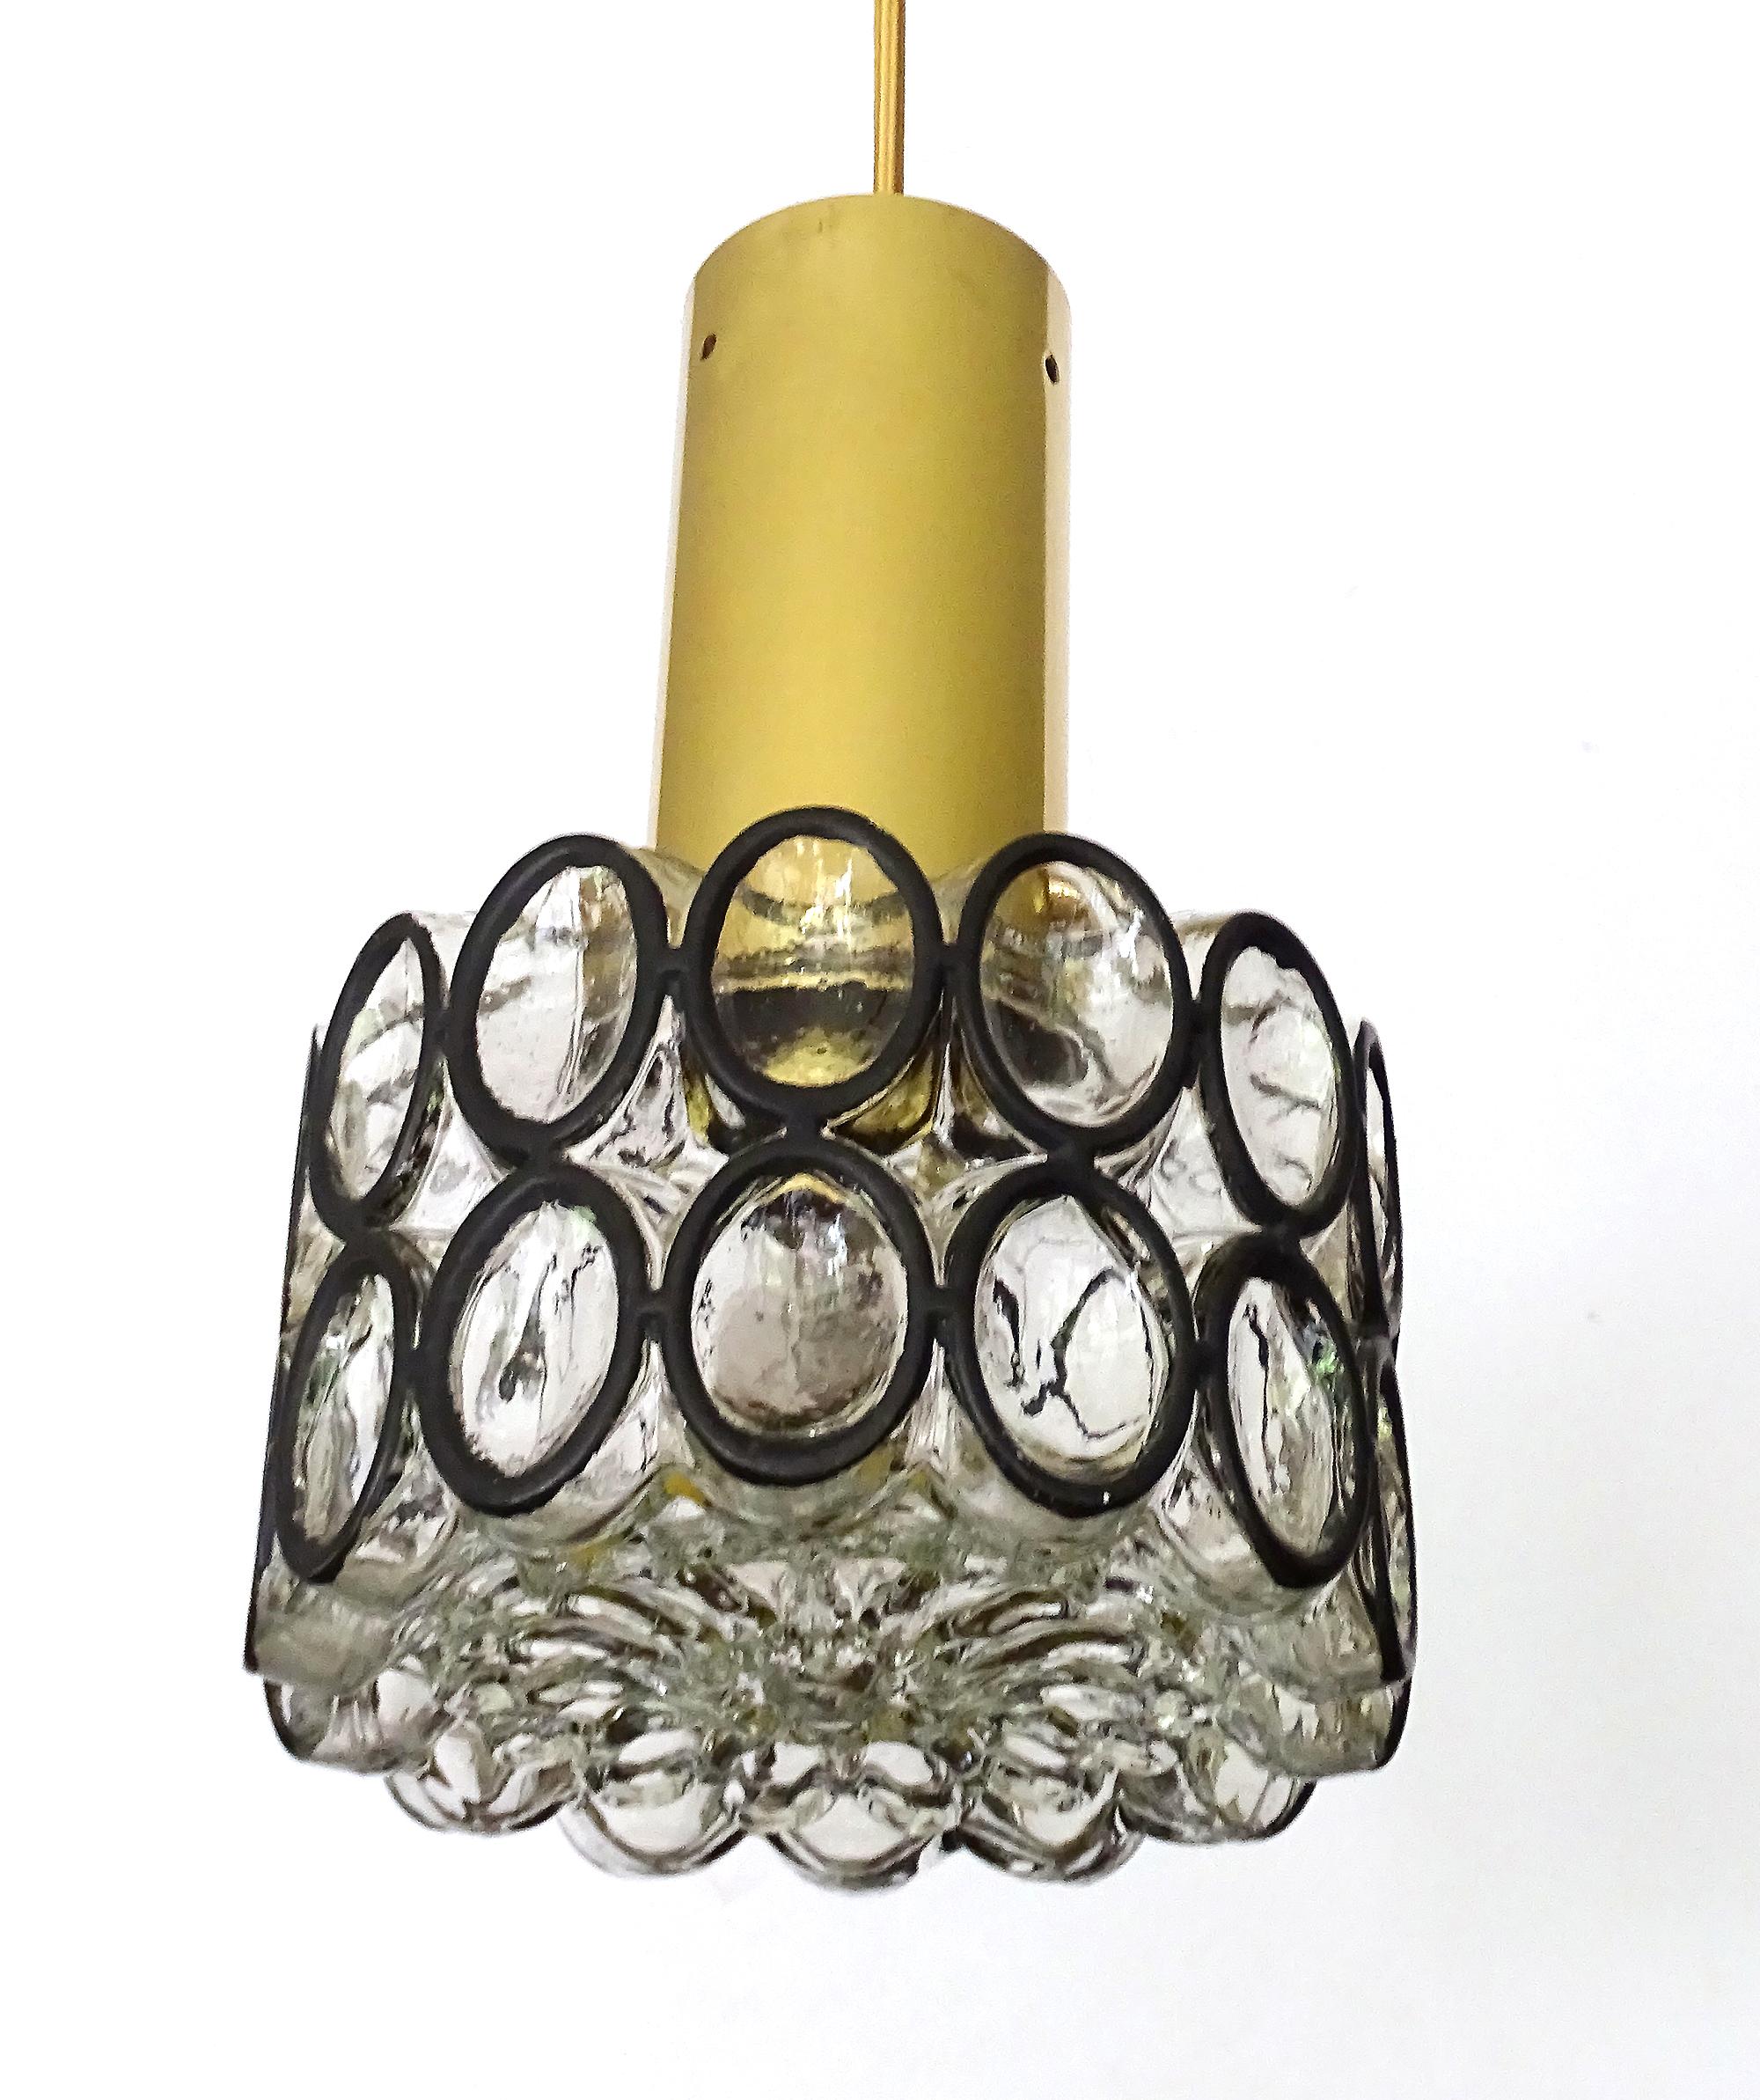 Limburg Glass and Brass Pendant Light, 1970s For Sale 1